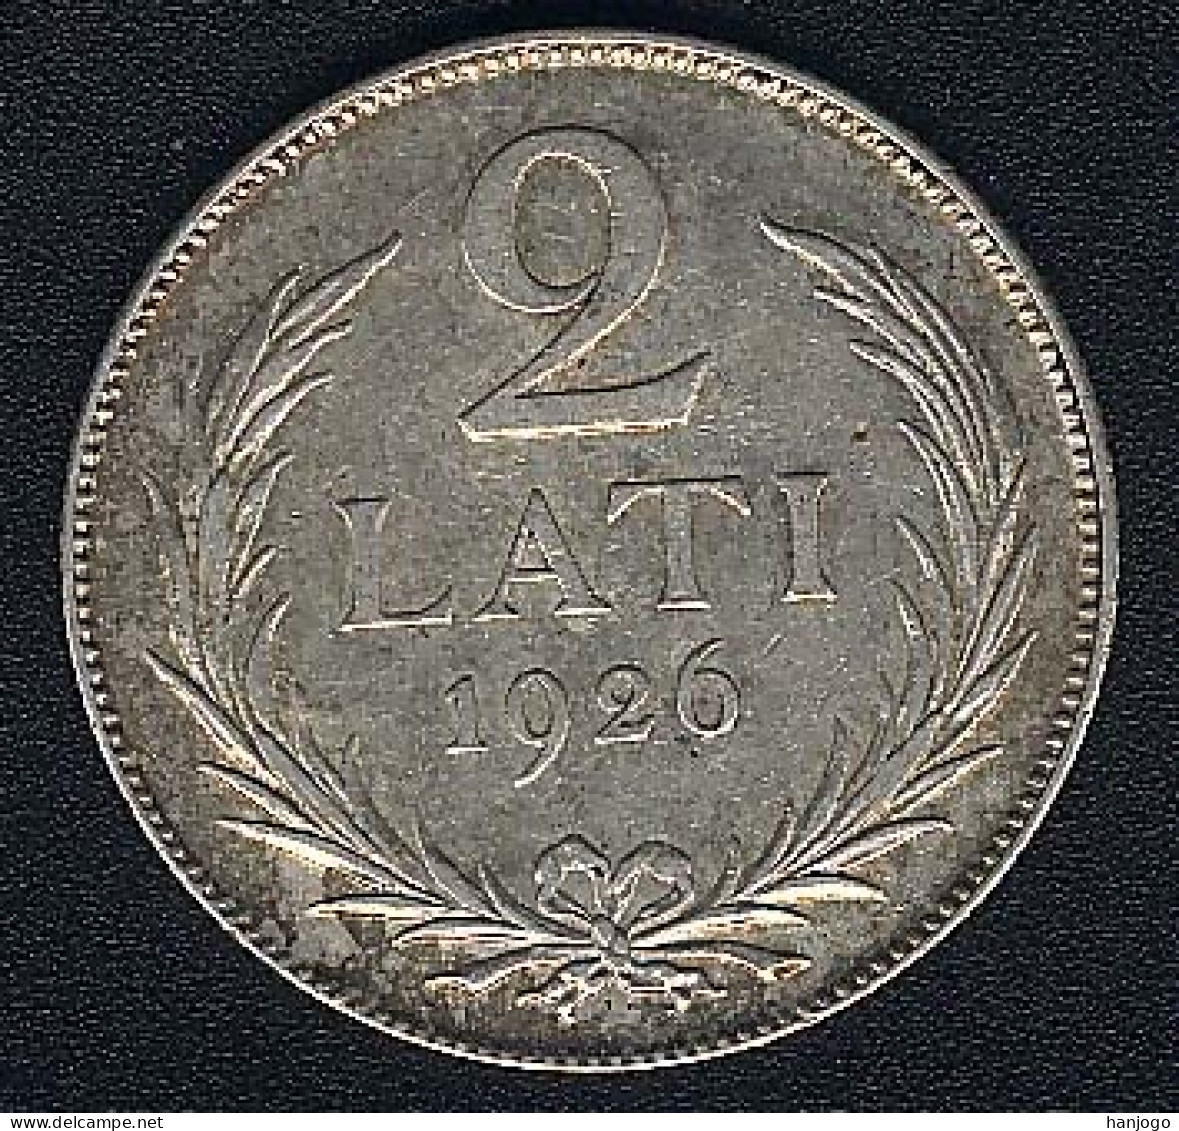 Lettland, 2 Lati 1926, Silber, XF - Letonia